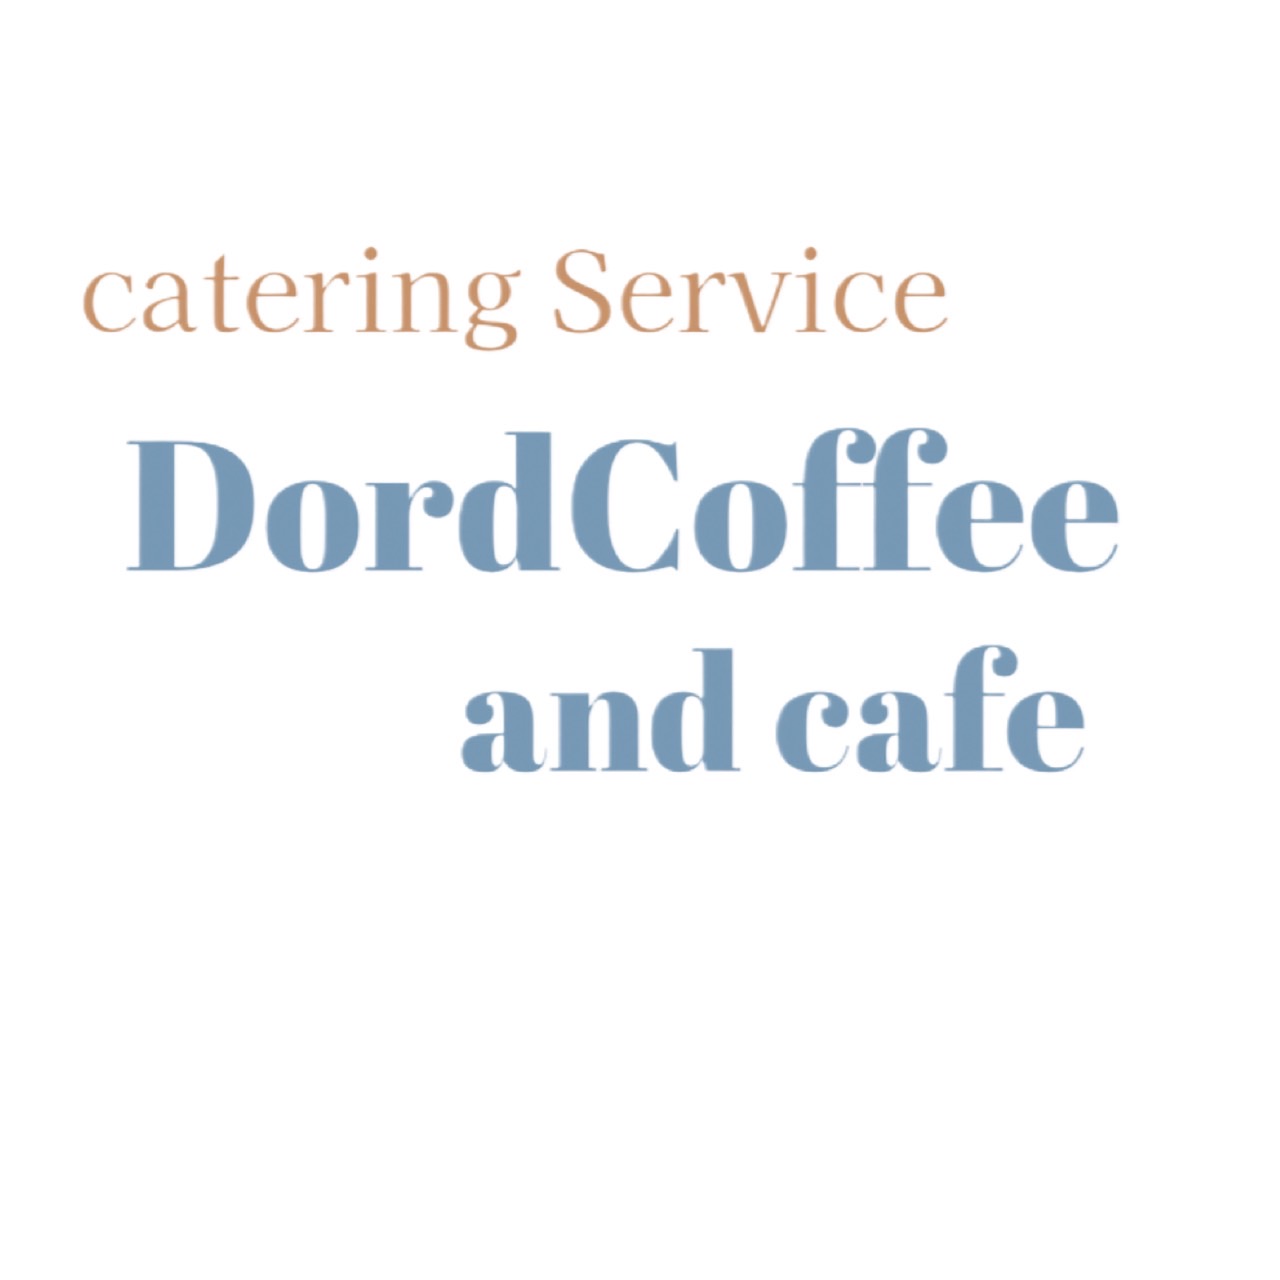 Dordcoffee & cafe ホームページ